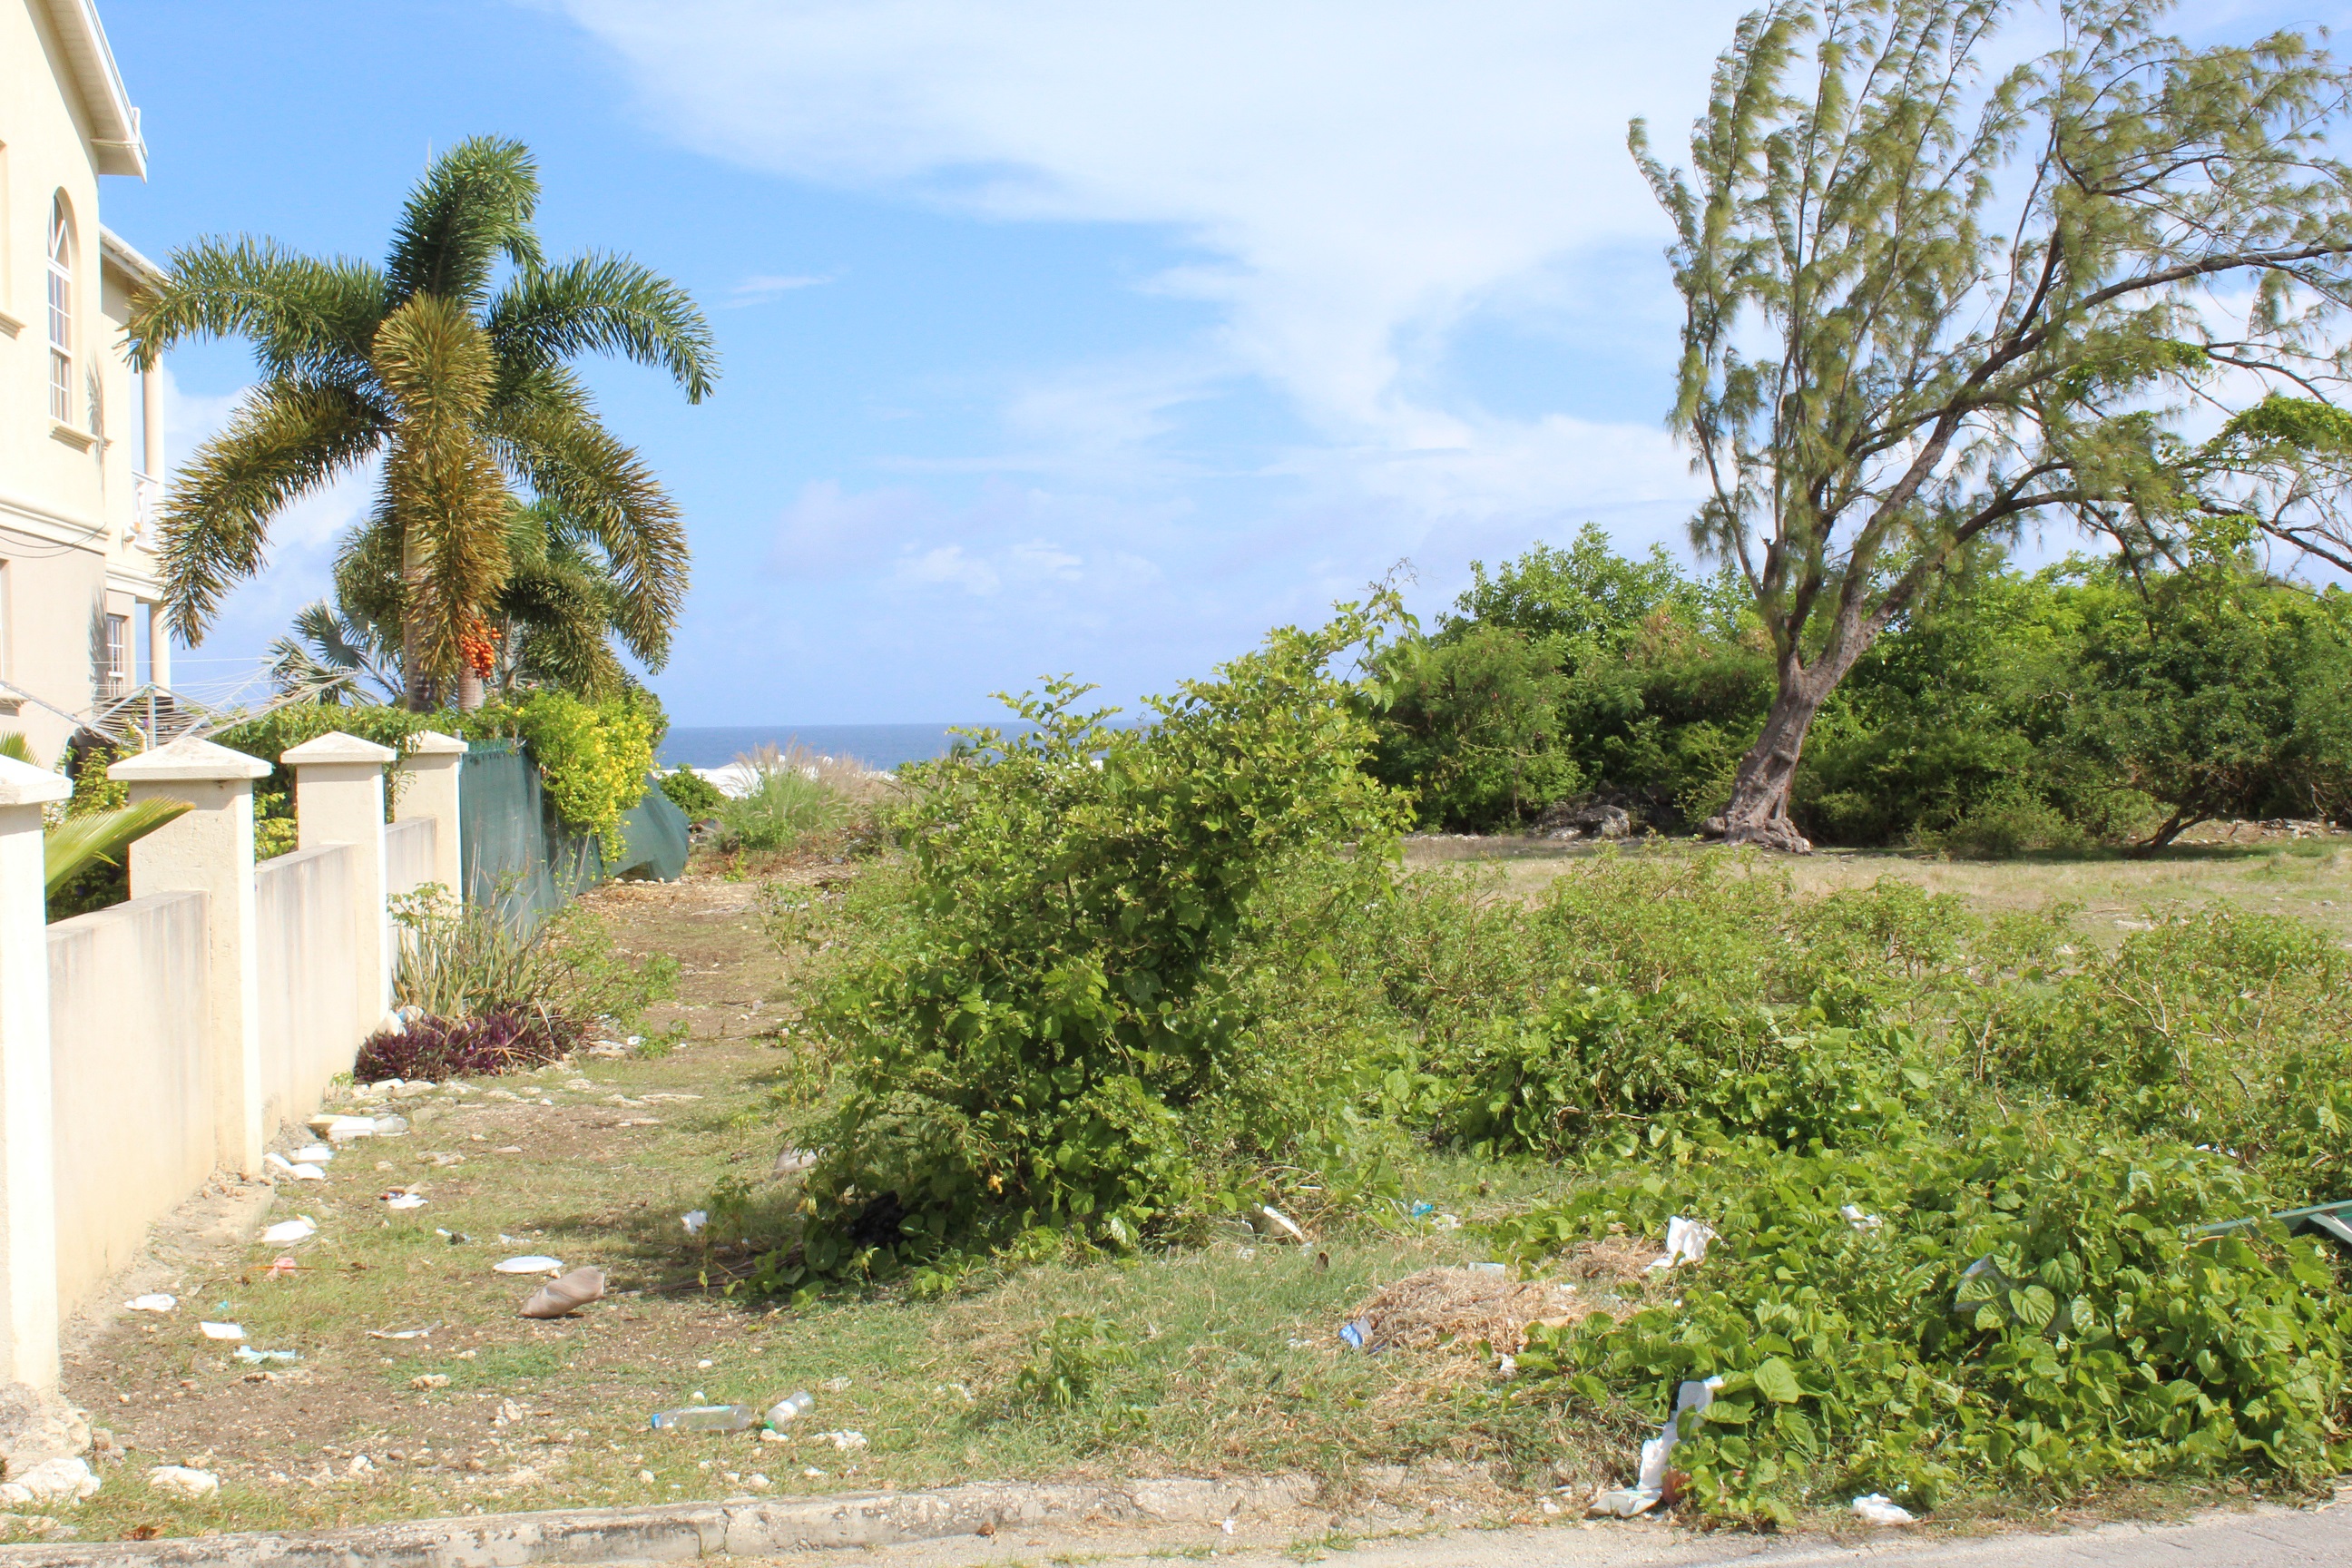 Enterprise, Landsdown Lot 2, Christ Church Barbados.